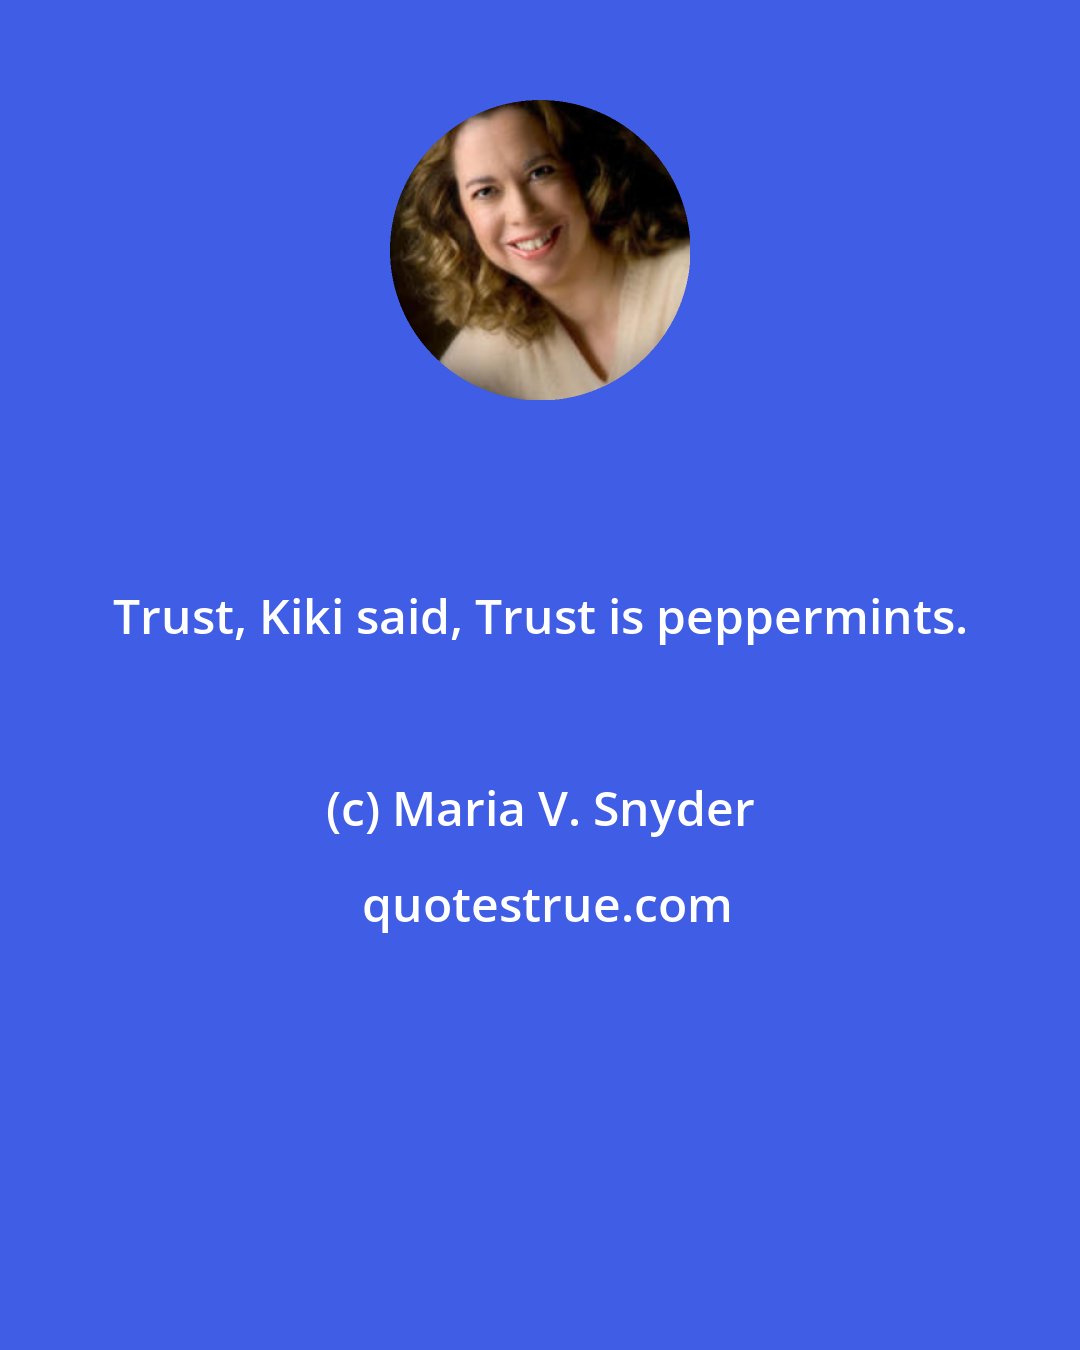 Maria V. Snyder: Trust, Kiki said, Trust is peppermints.